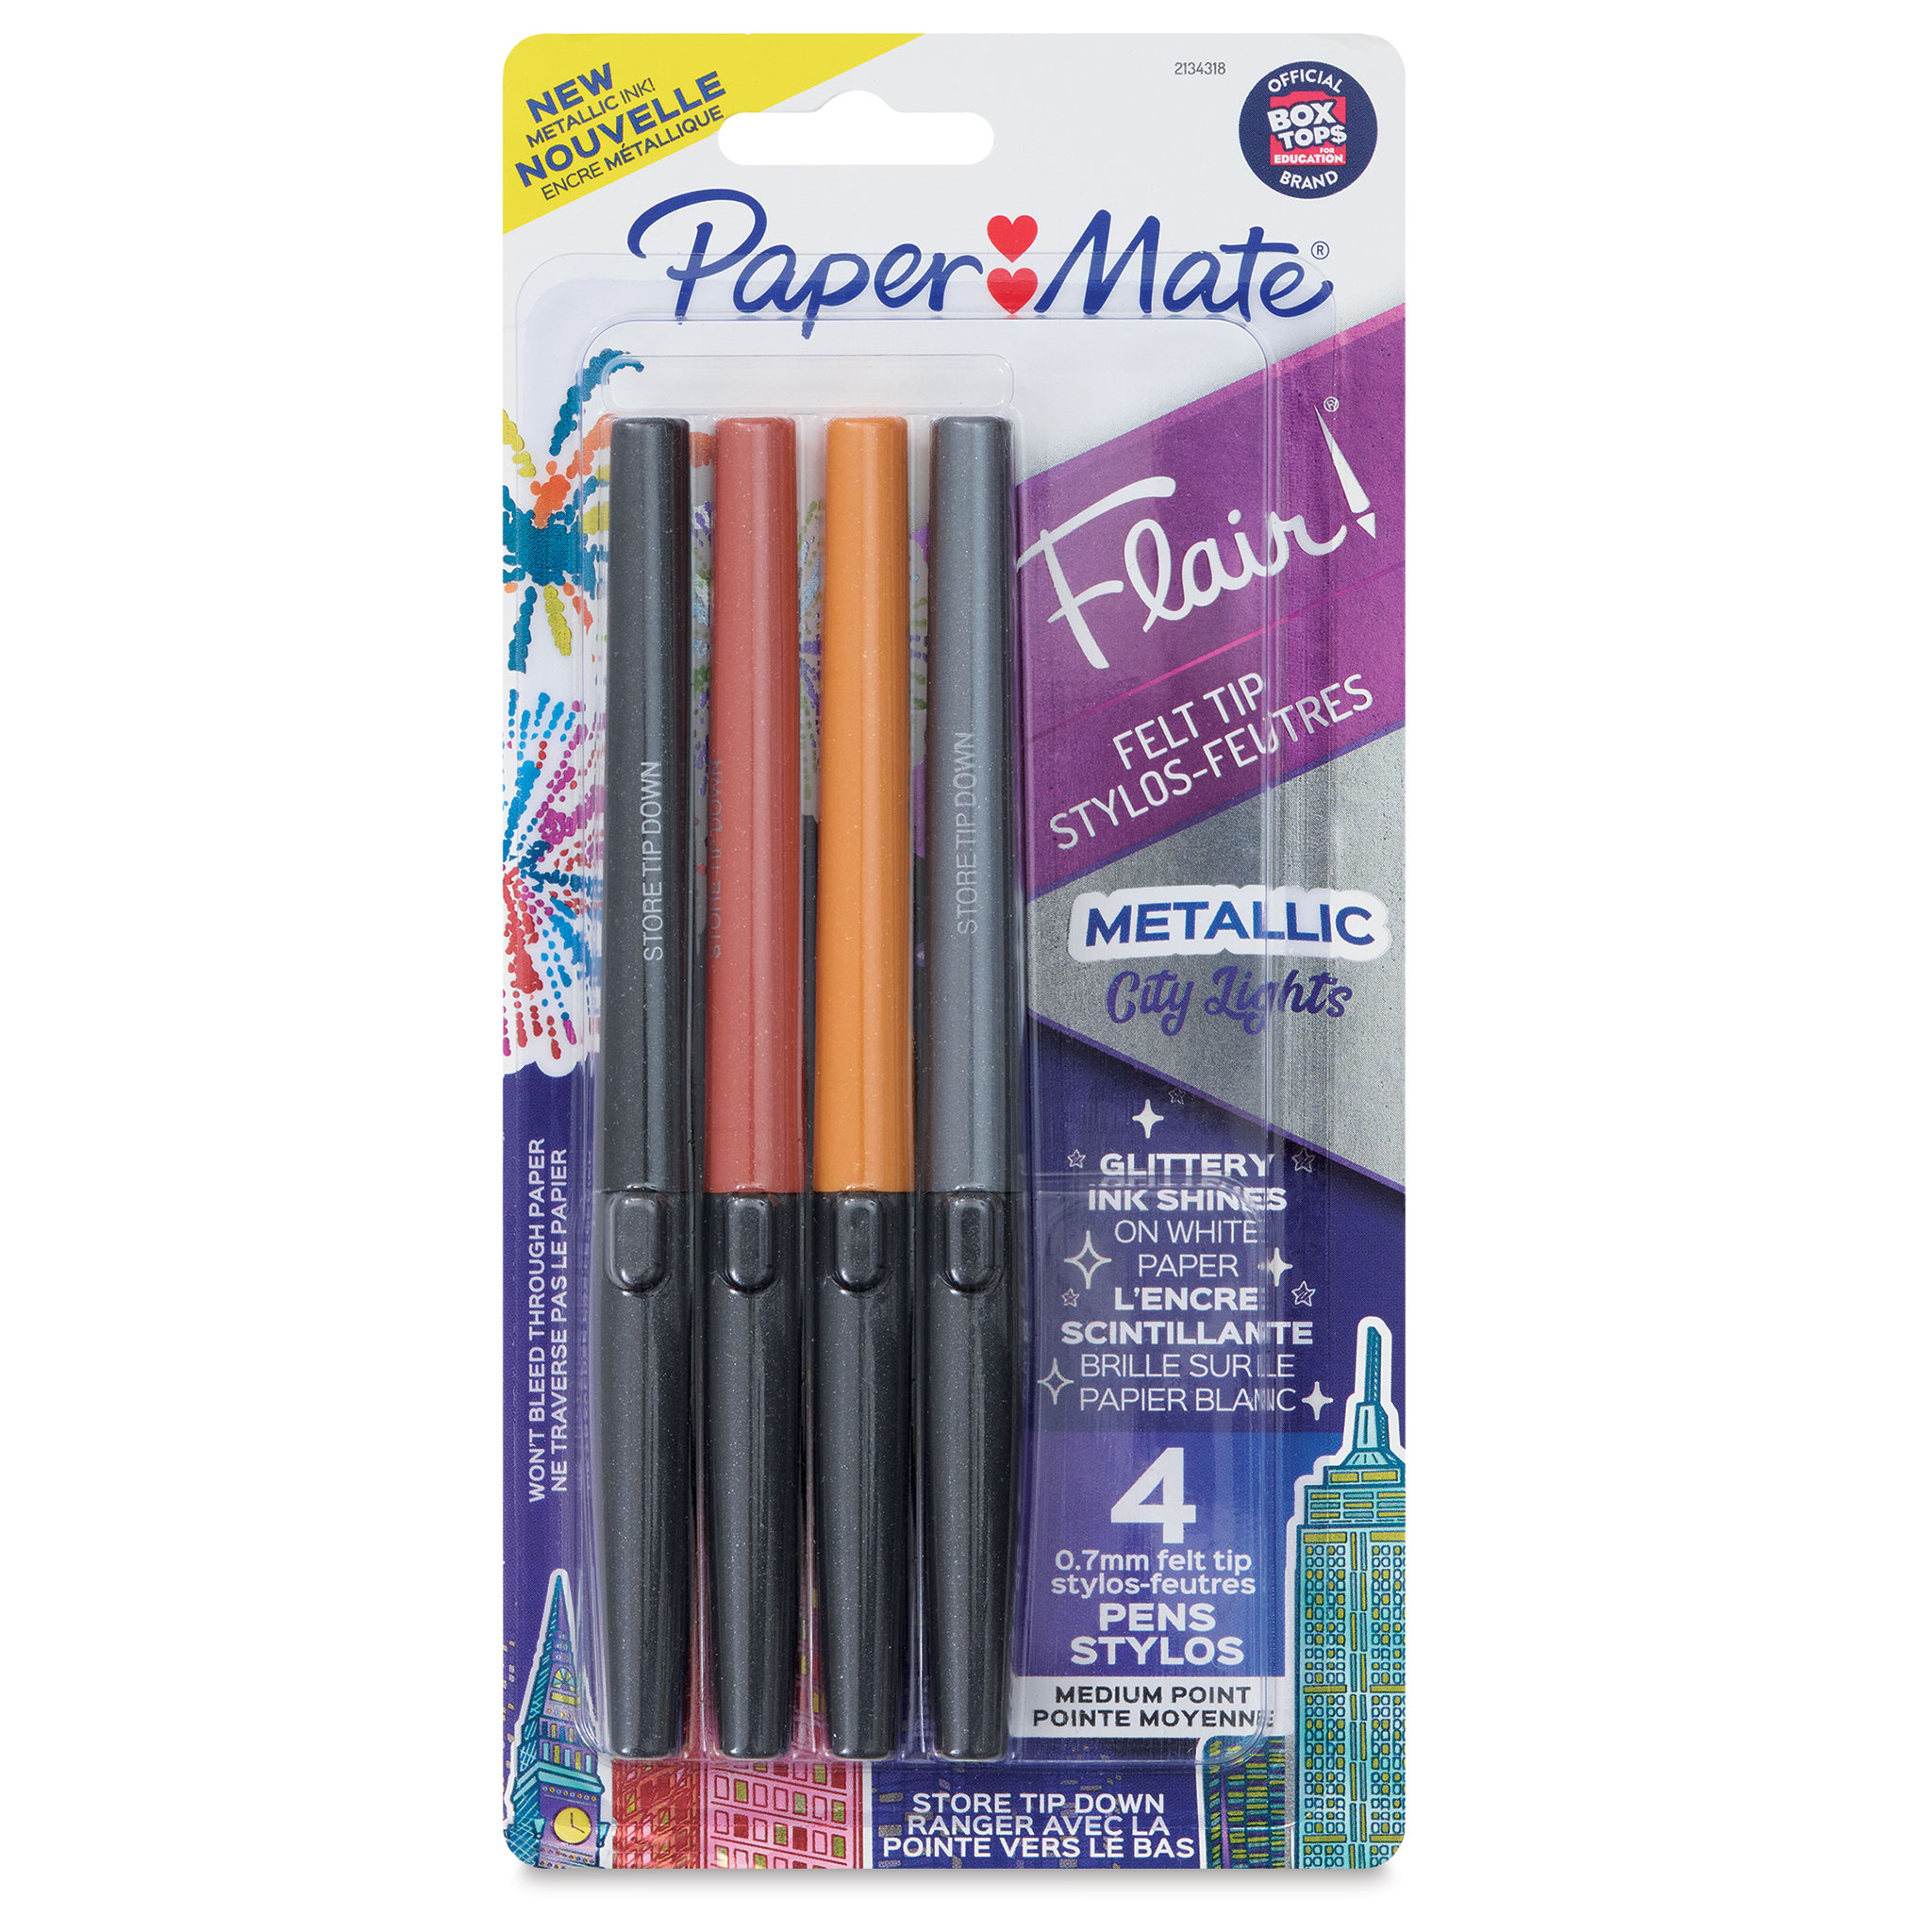 Paper Mate Flair Metallic Pen Sets